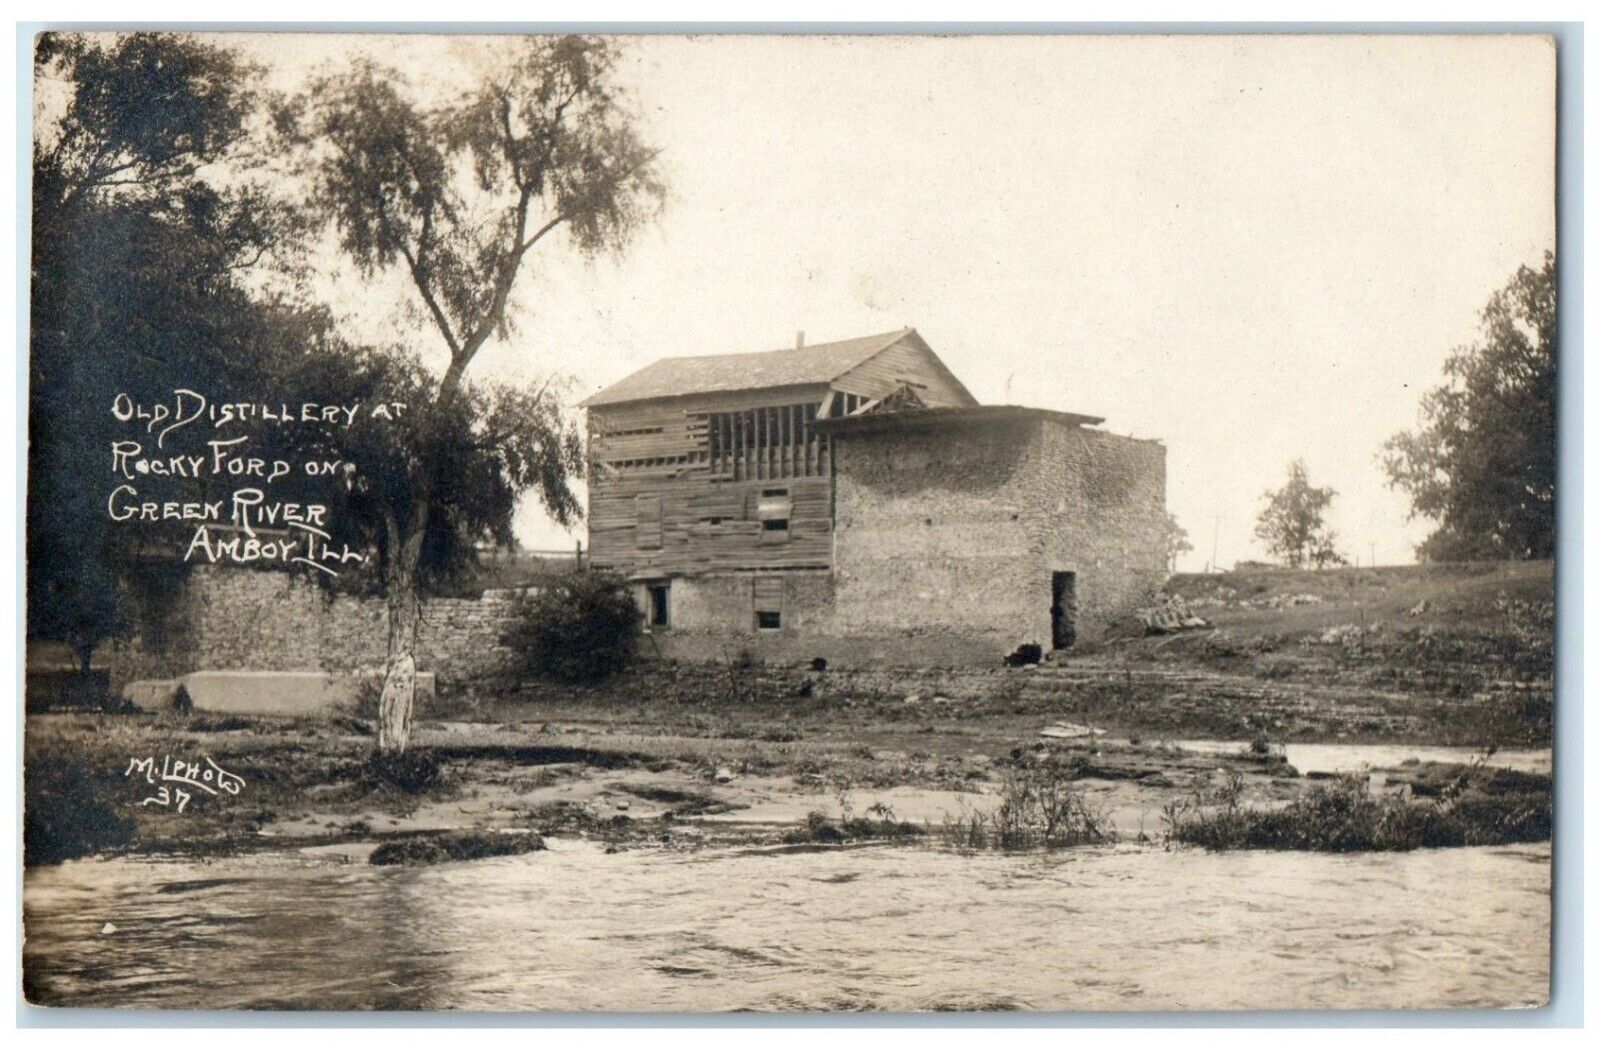 1913 Old Distillery At Rockford Green River Amboy Illinois RPPC Photo Postcard